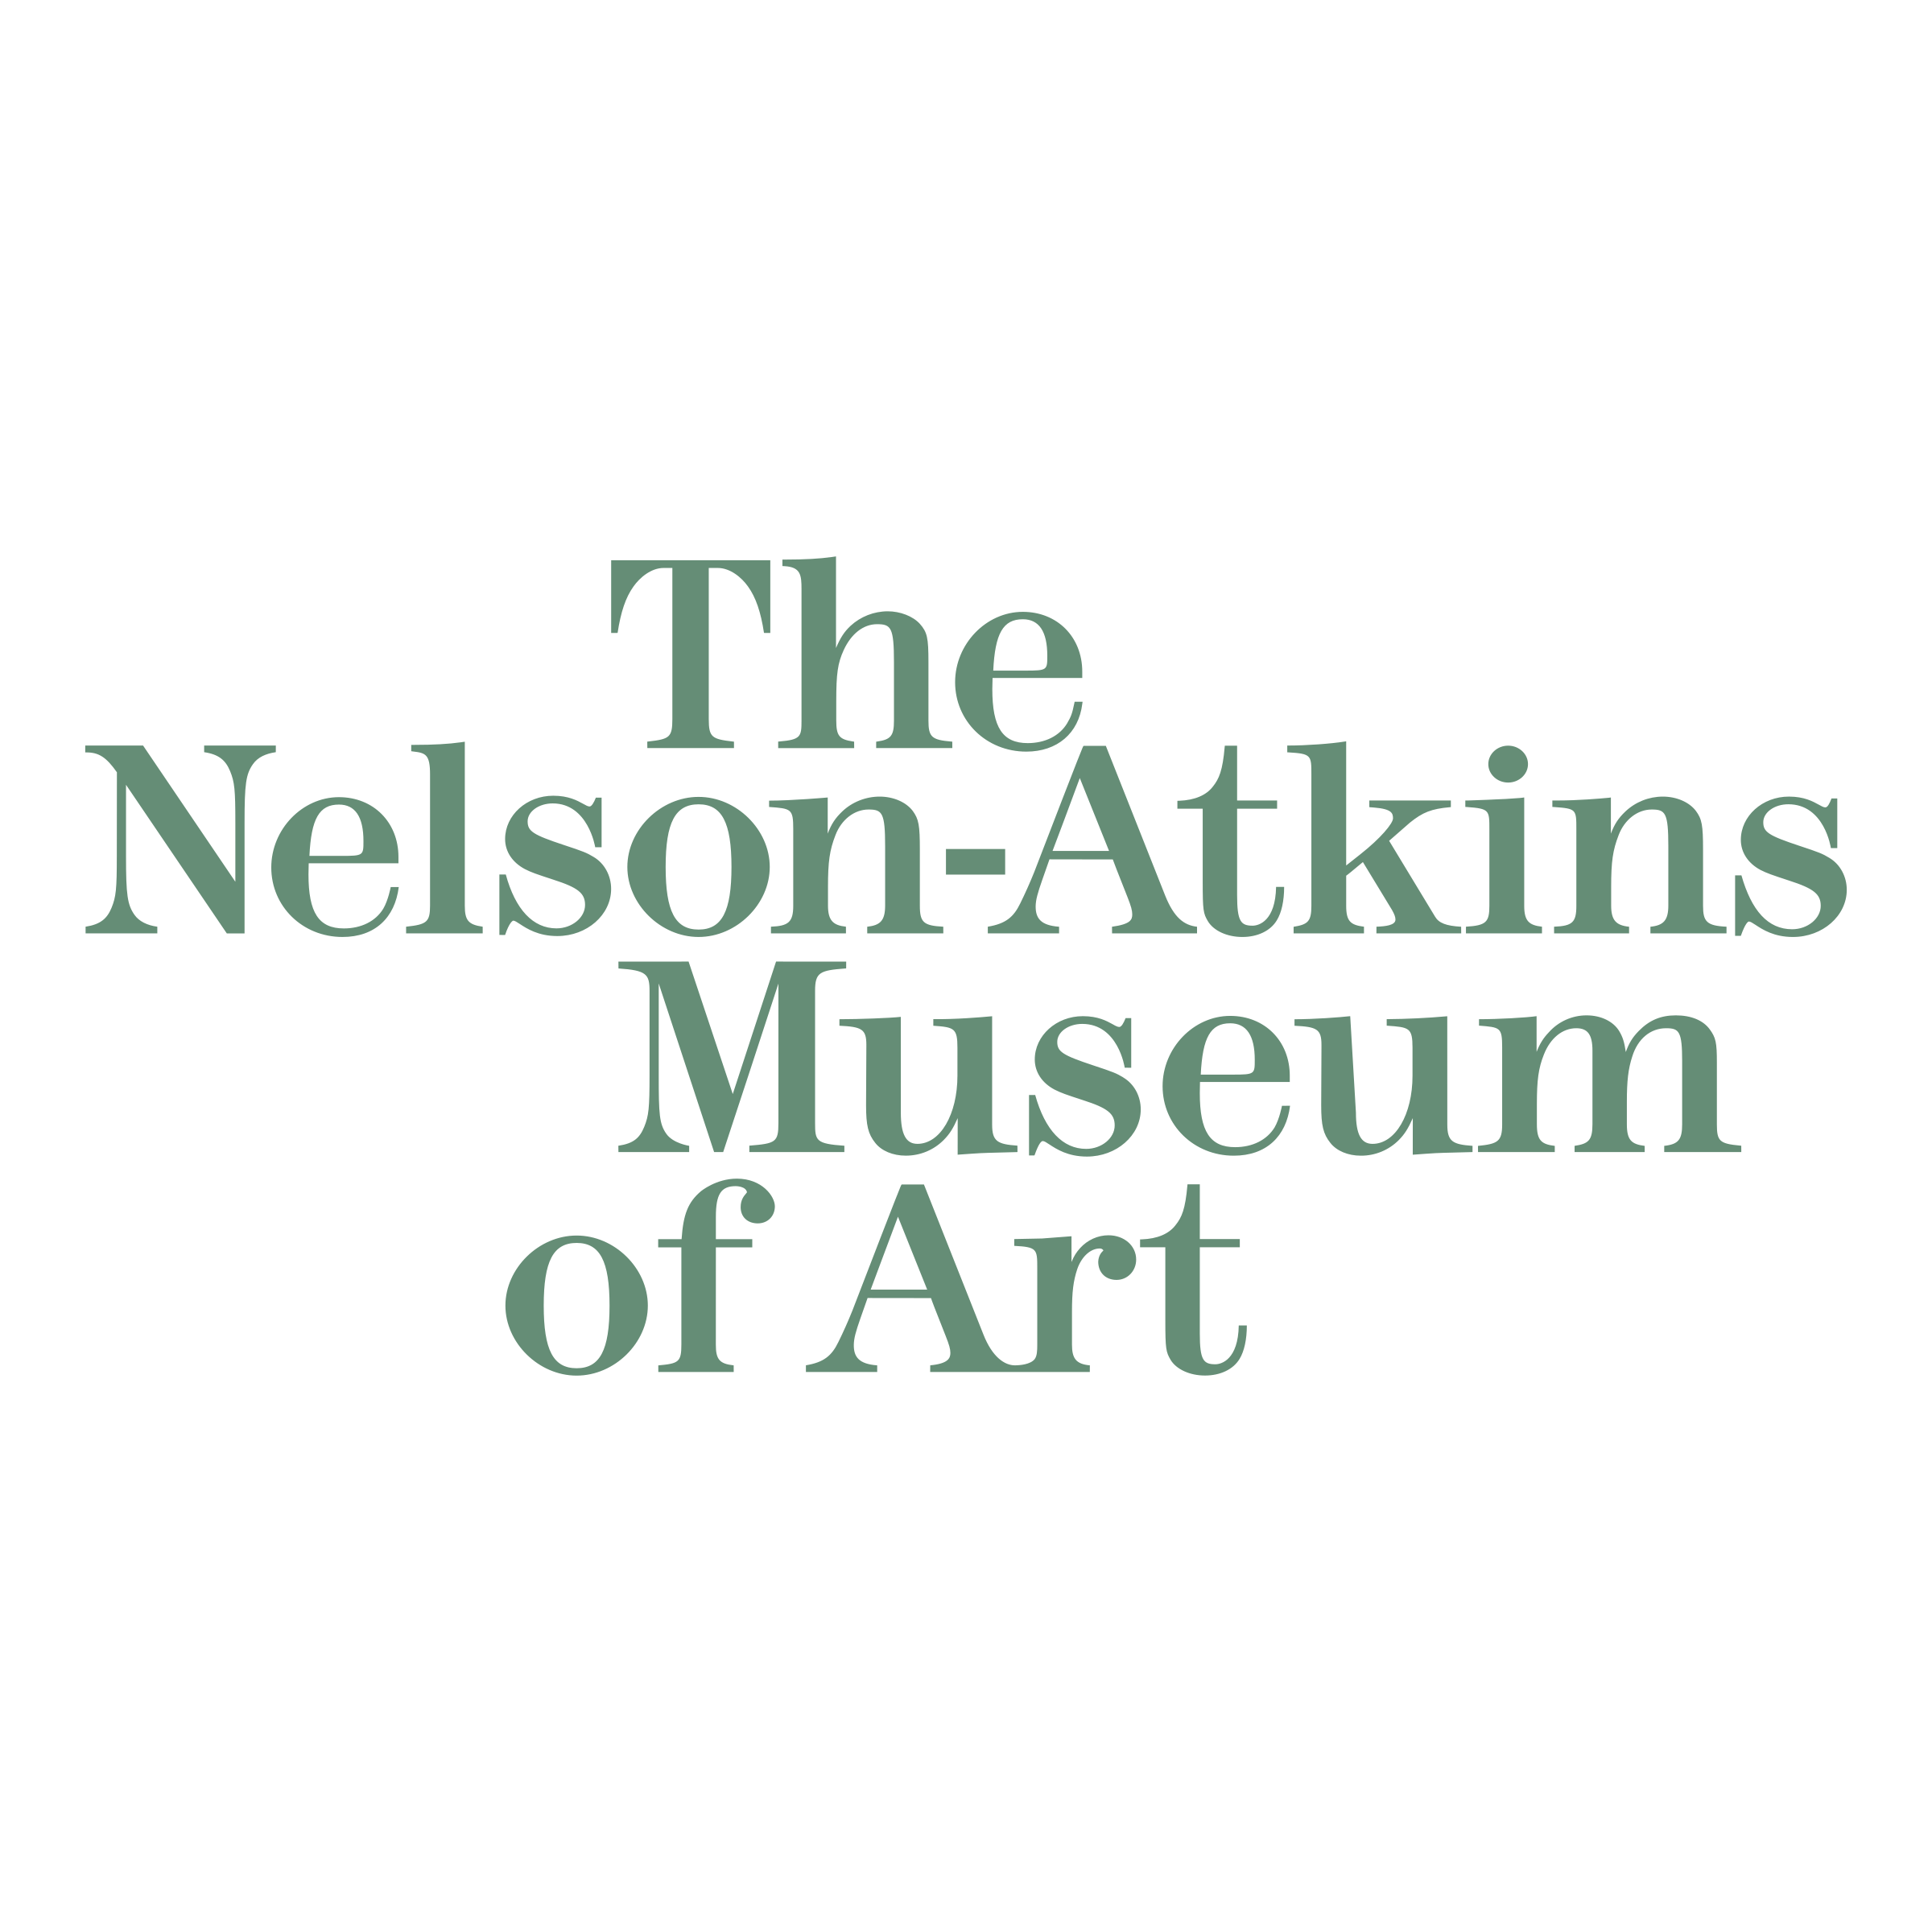 Atkins Logo - Nelson Atkins Museum of Art Logo PNG Transparent & SVG Vector